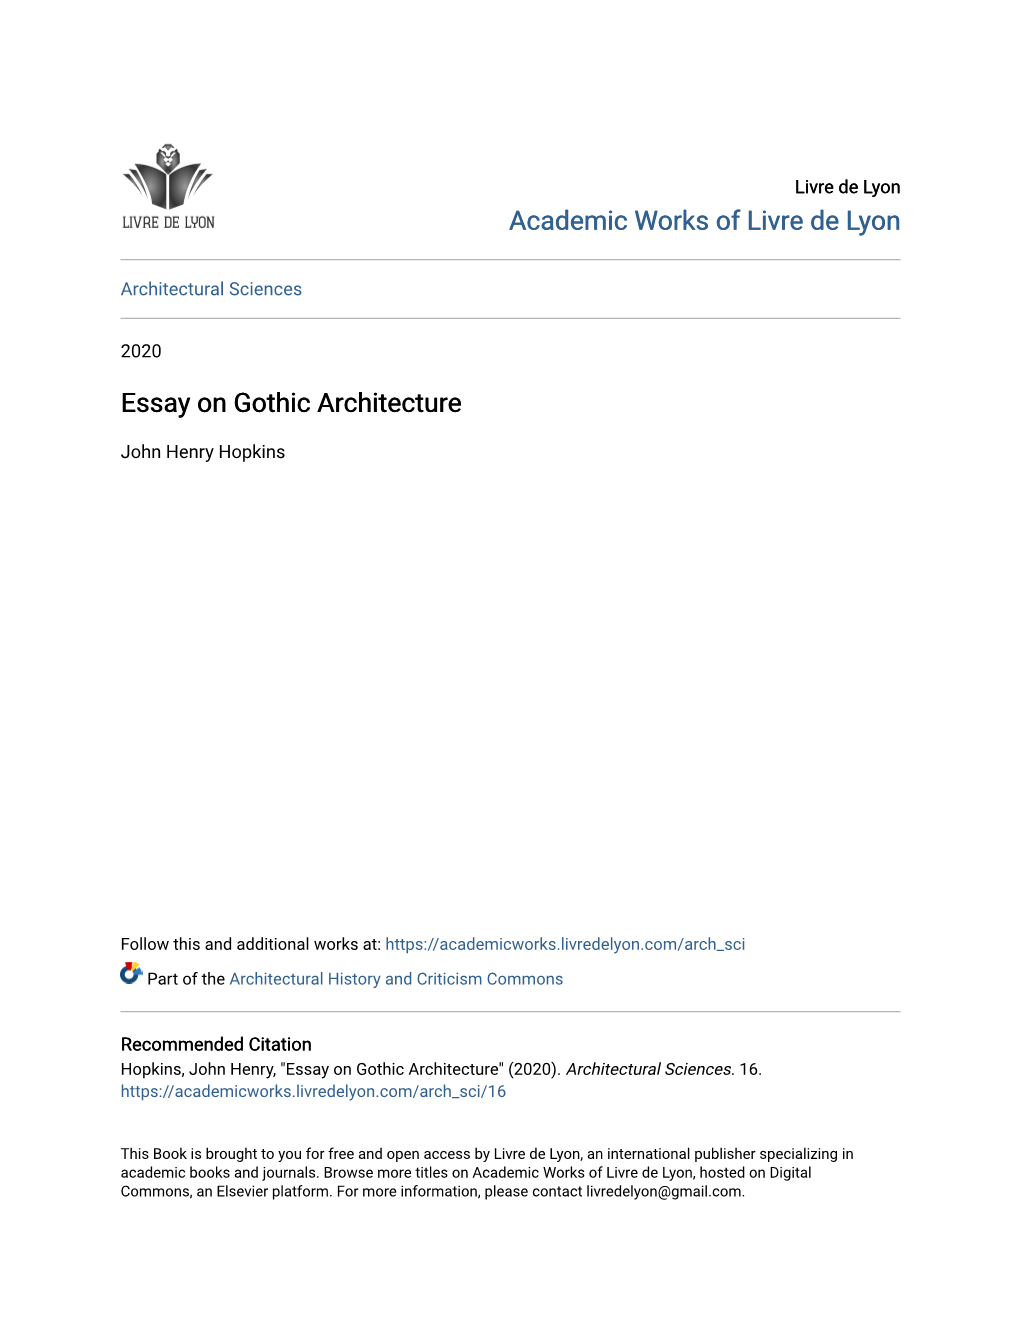 Essay on Gothic Architecture